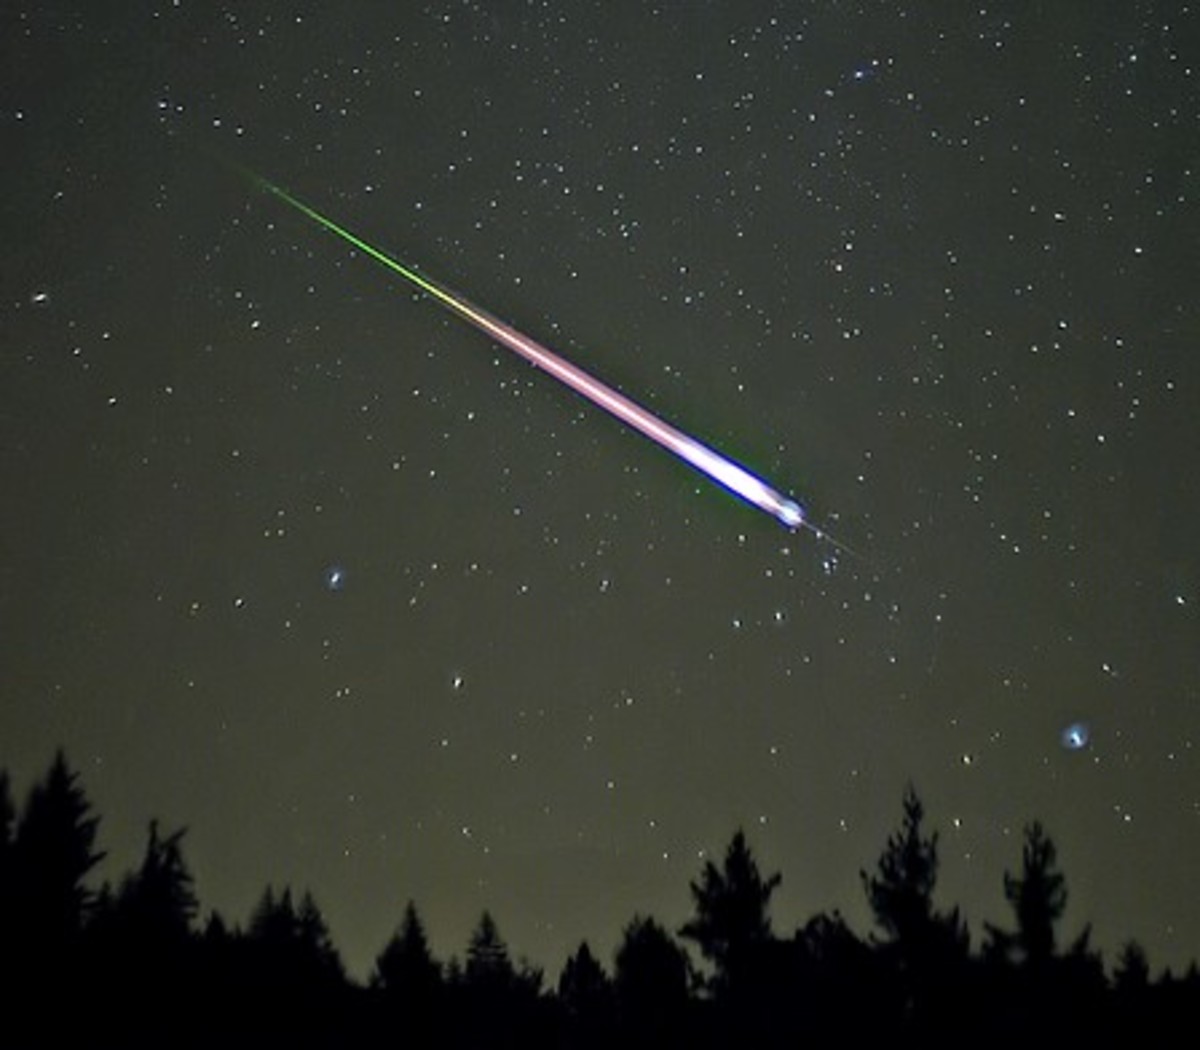 Leonid meteor shower 